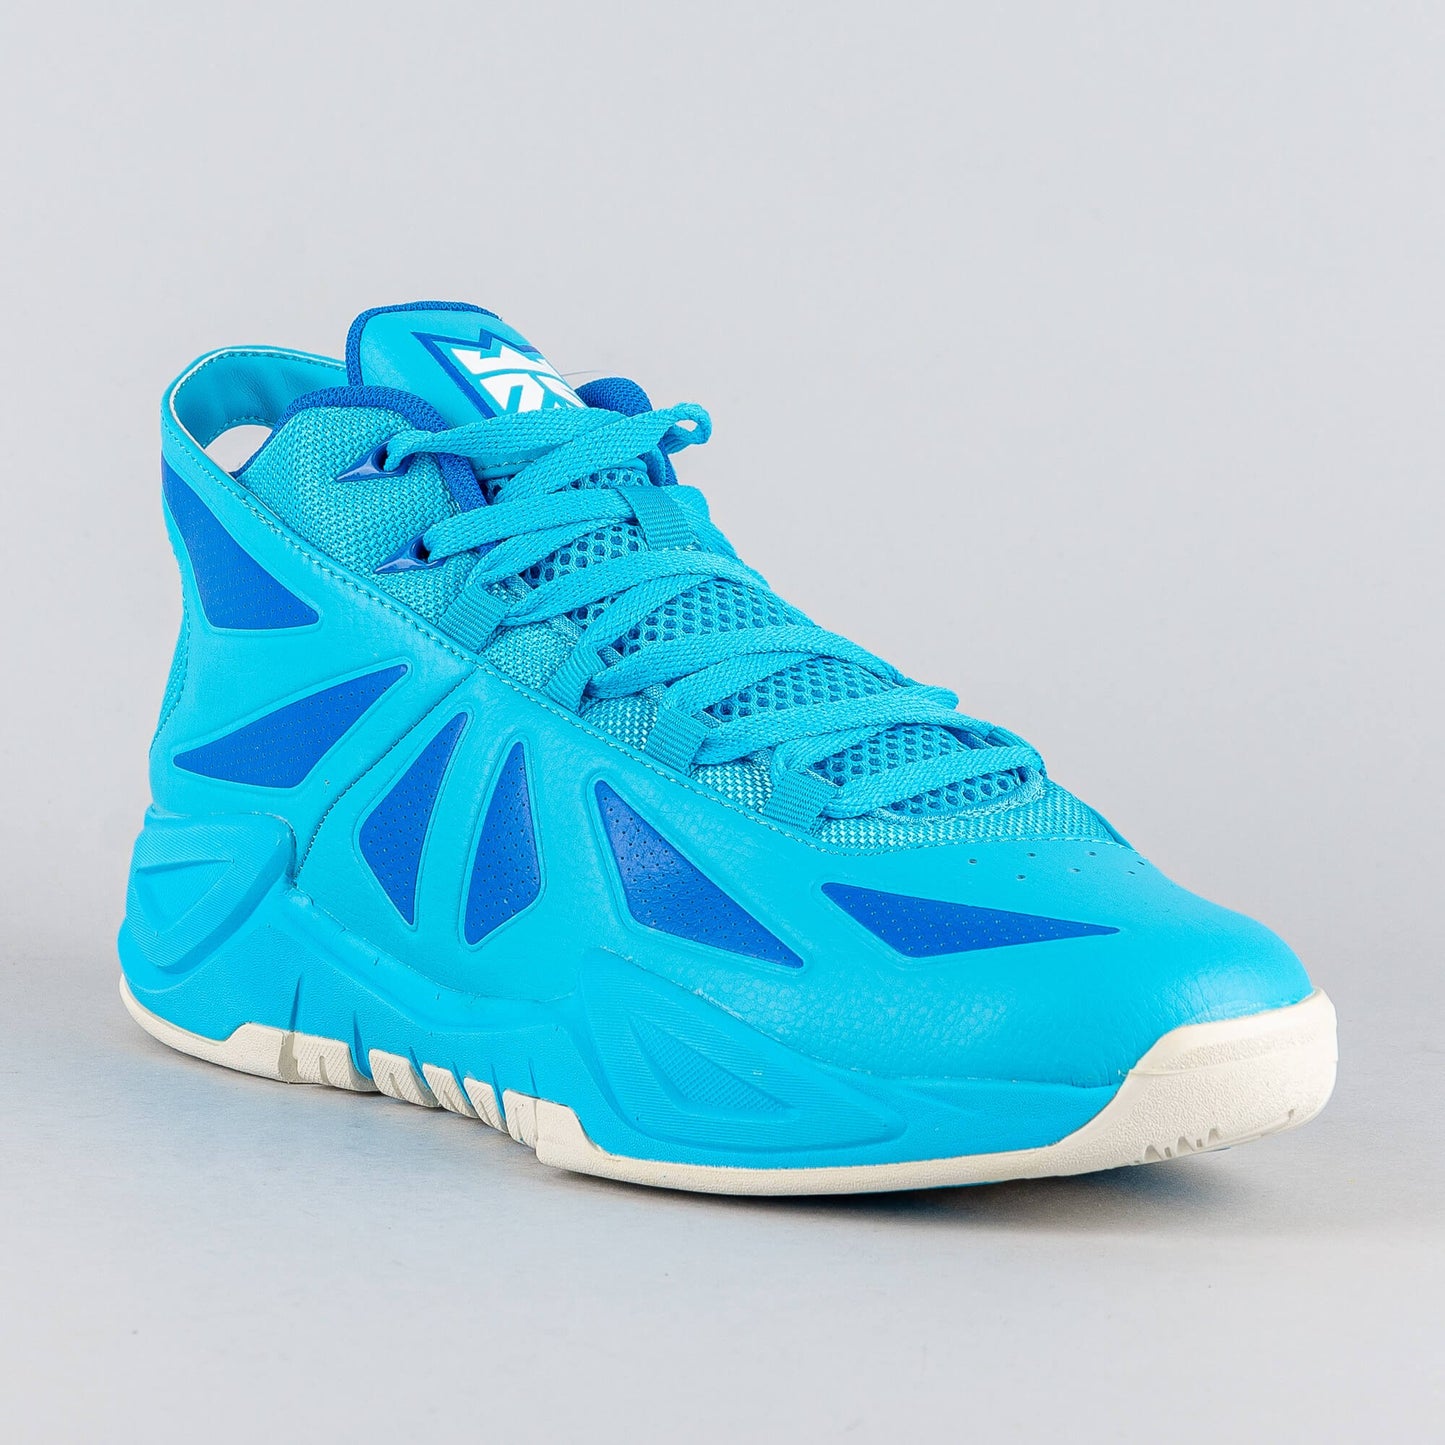 Peak Basketball Ares III Reborn Shoes Blue/Crystal Blue